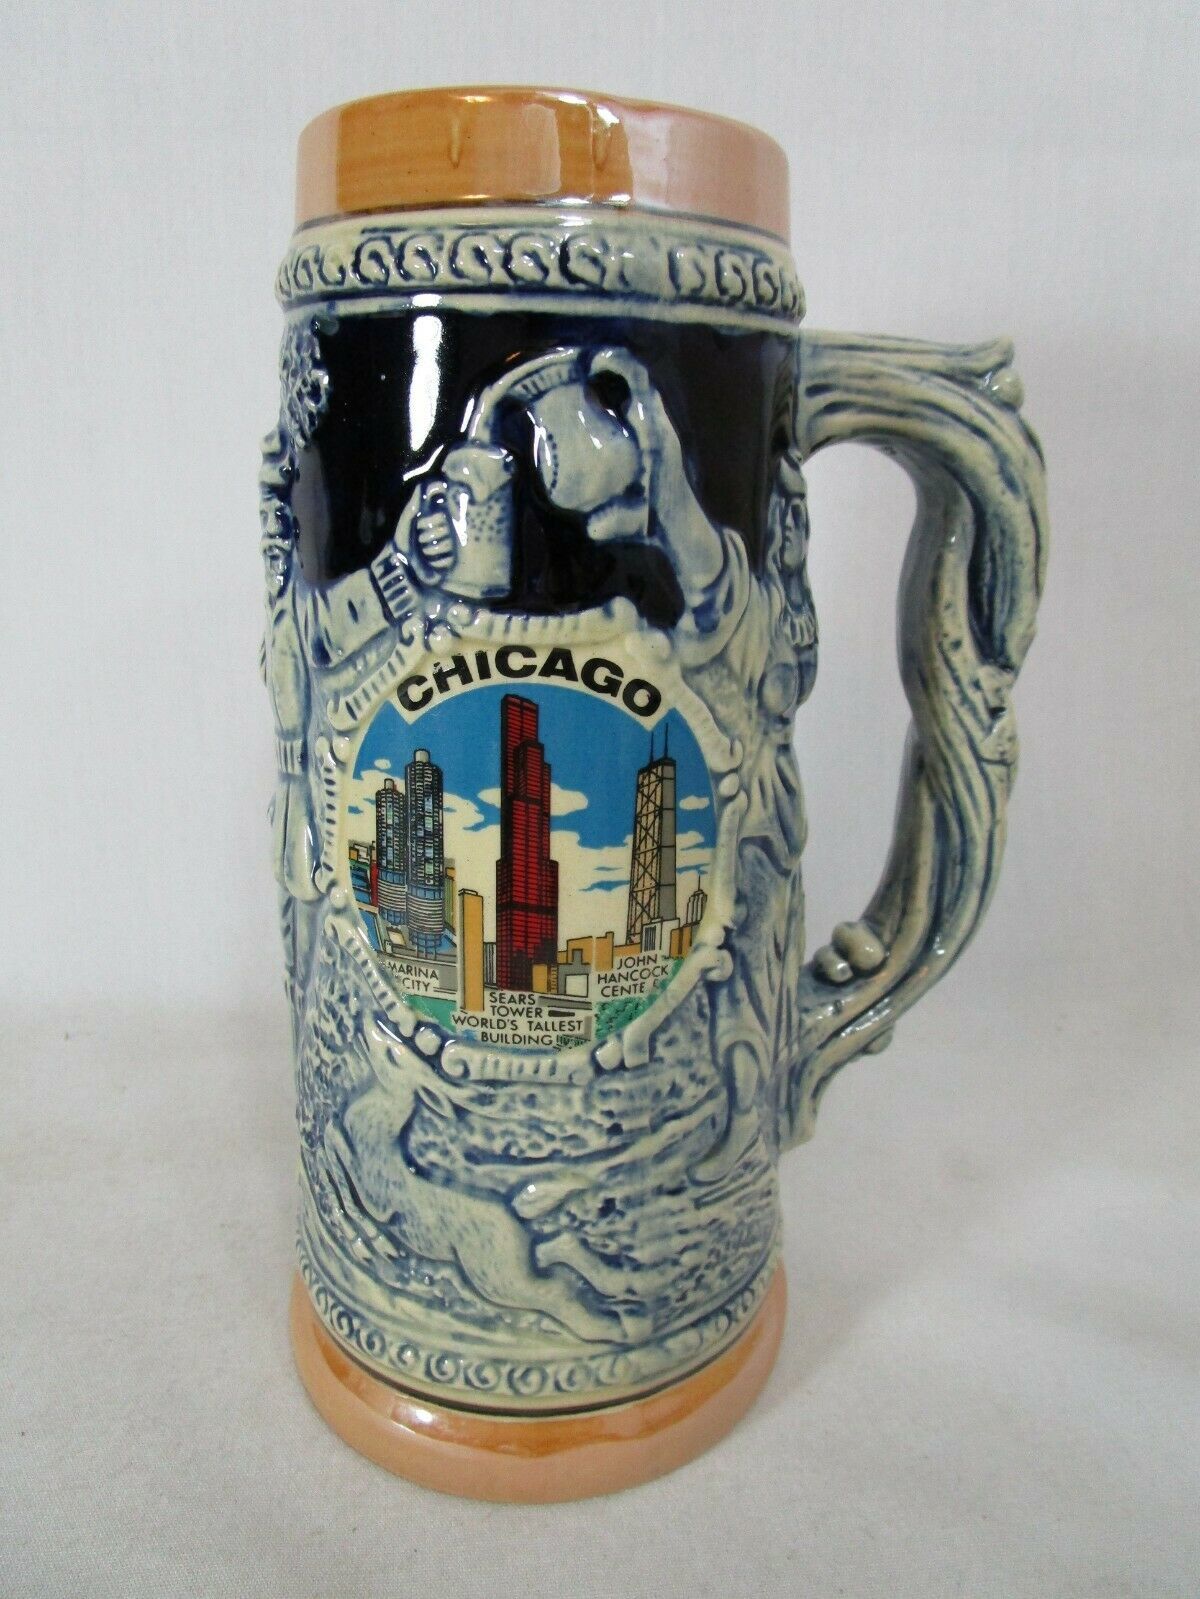 Primary image for Vintage Chicago Landmarks Beer Stein Sears Tower John Hancock Center Marina City